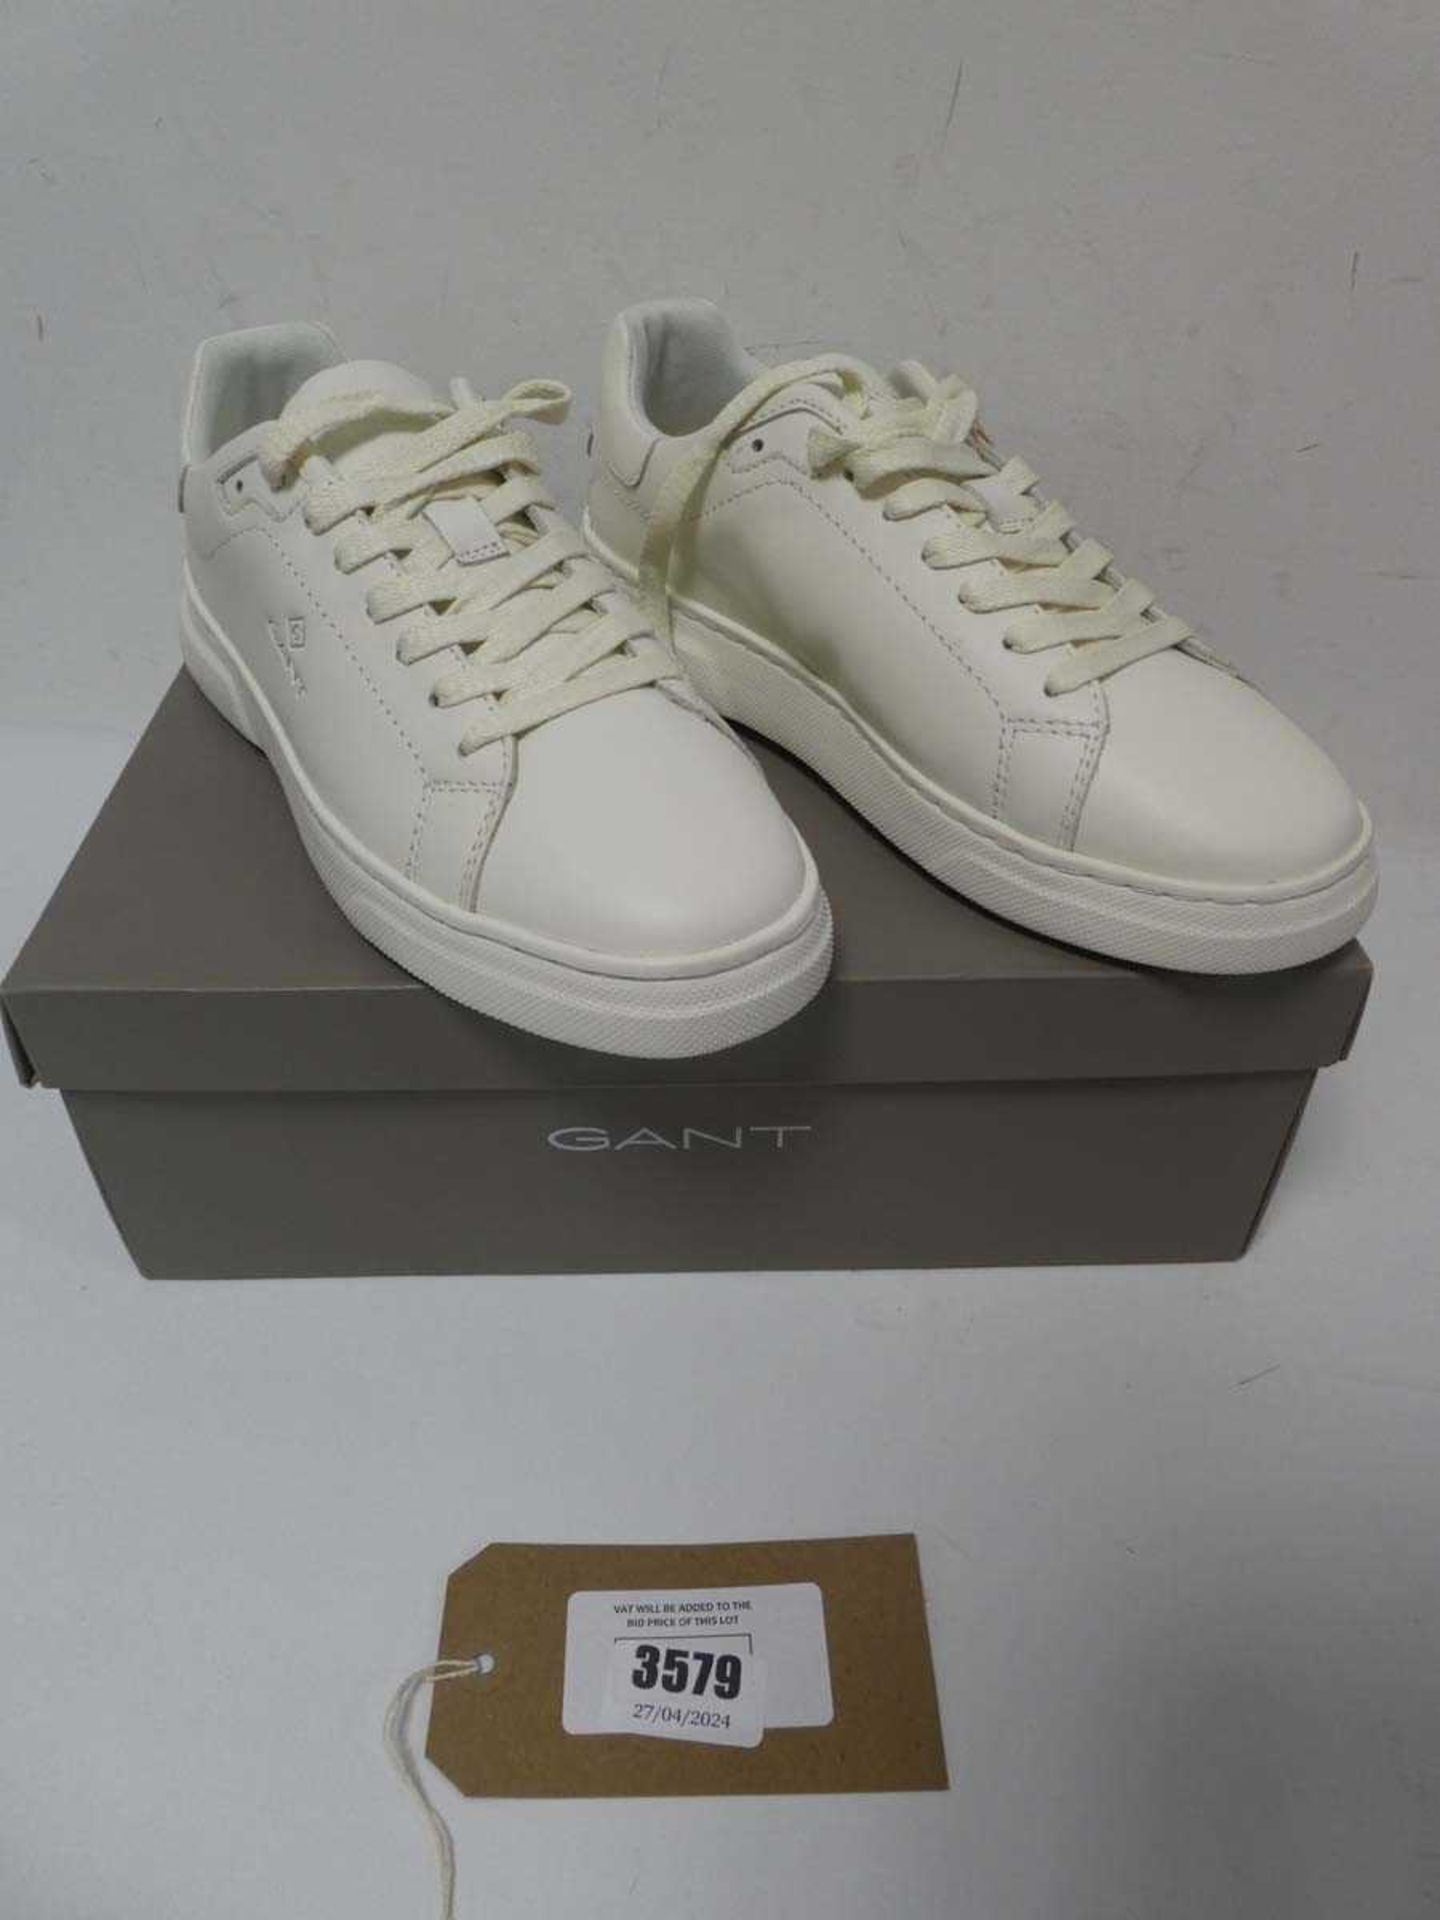 +VAT 1 x men's Gant trainers, UK 8